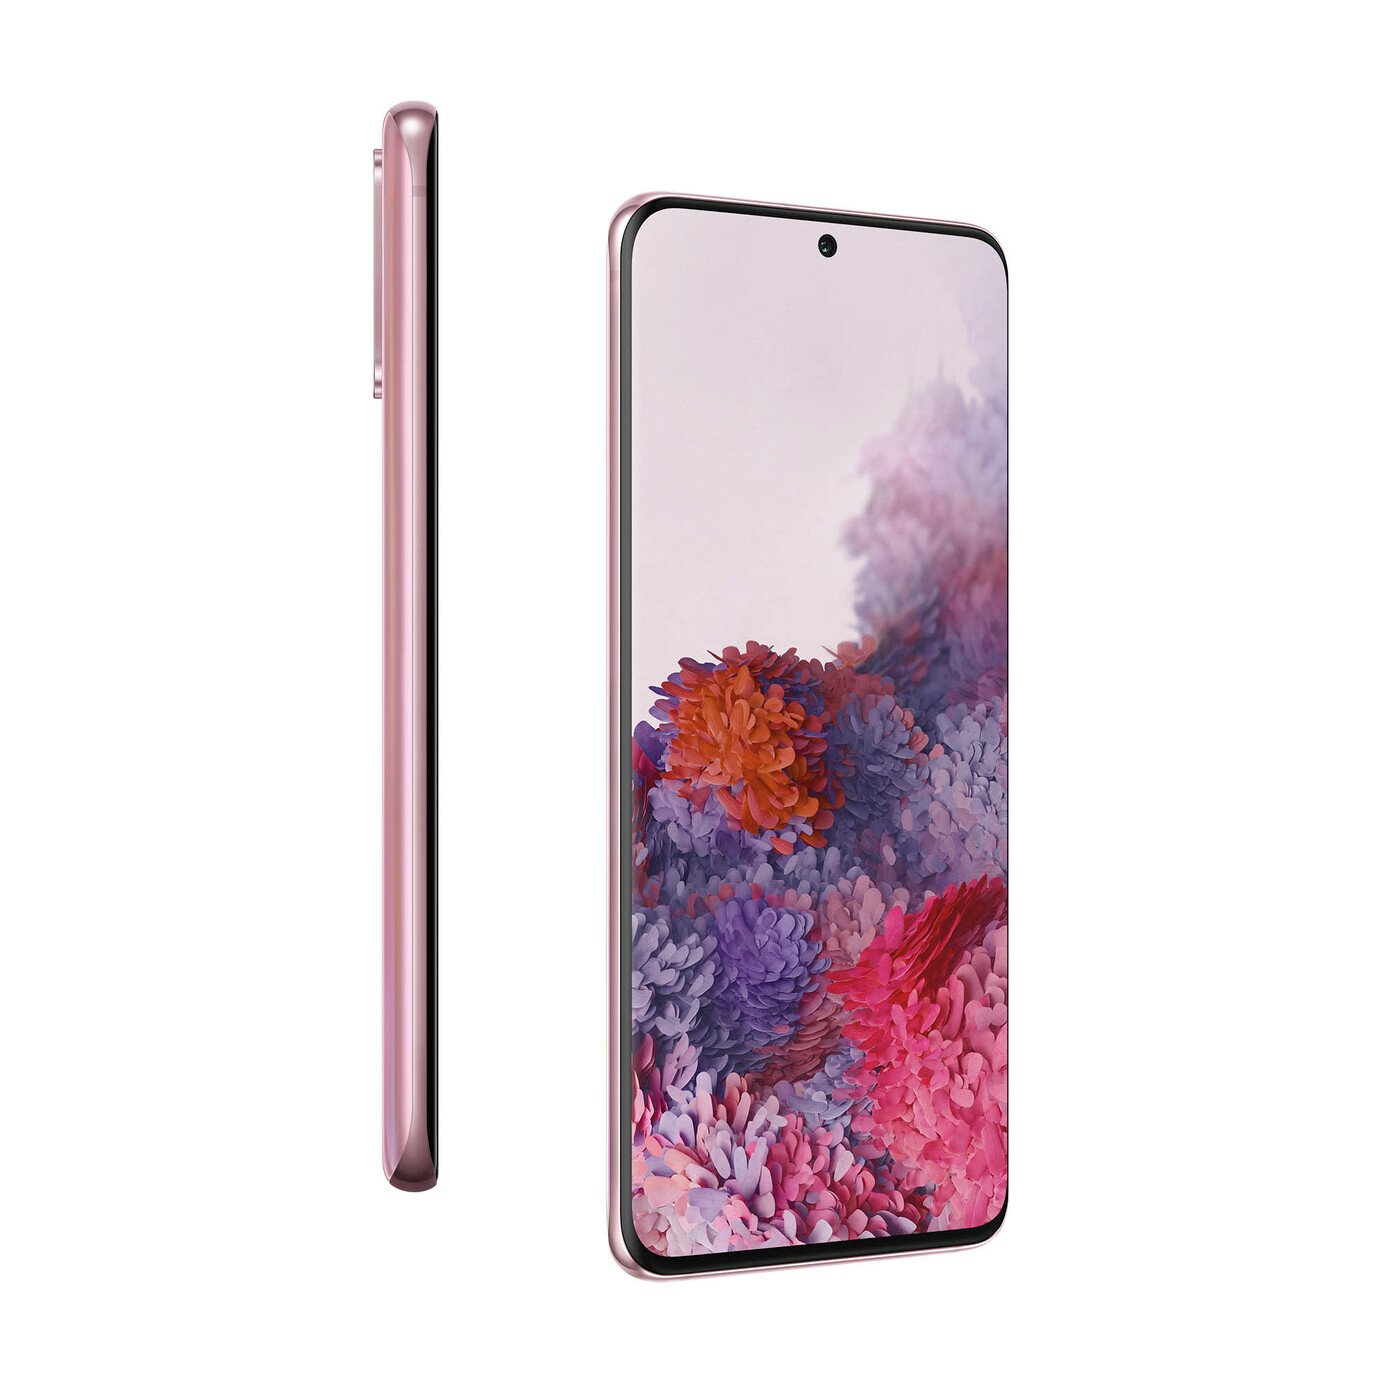 SIM Free Samsung Galaxy S20 128GB 5G Mobile Phone-Cloud Pink Review